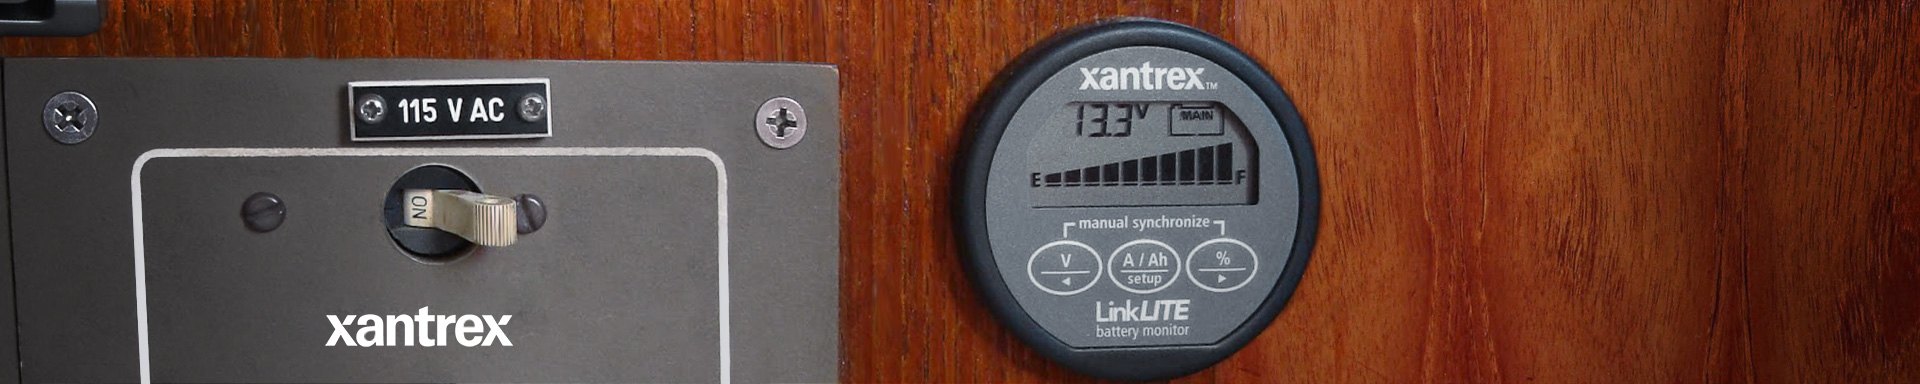 Xantrex Marine Power Converters